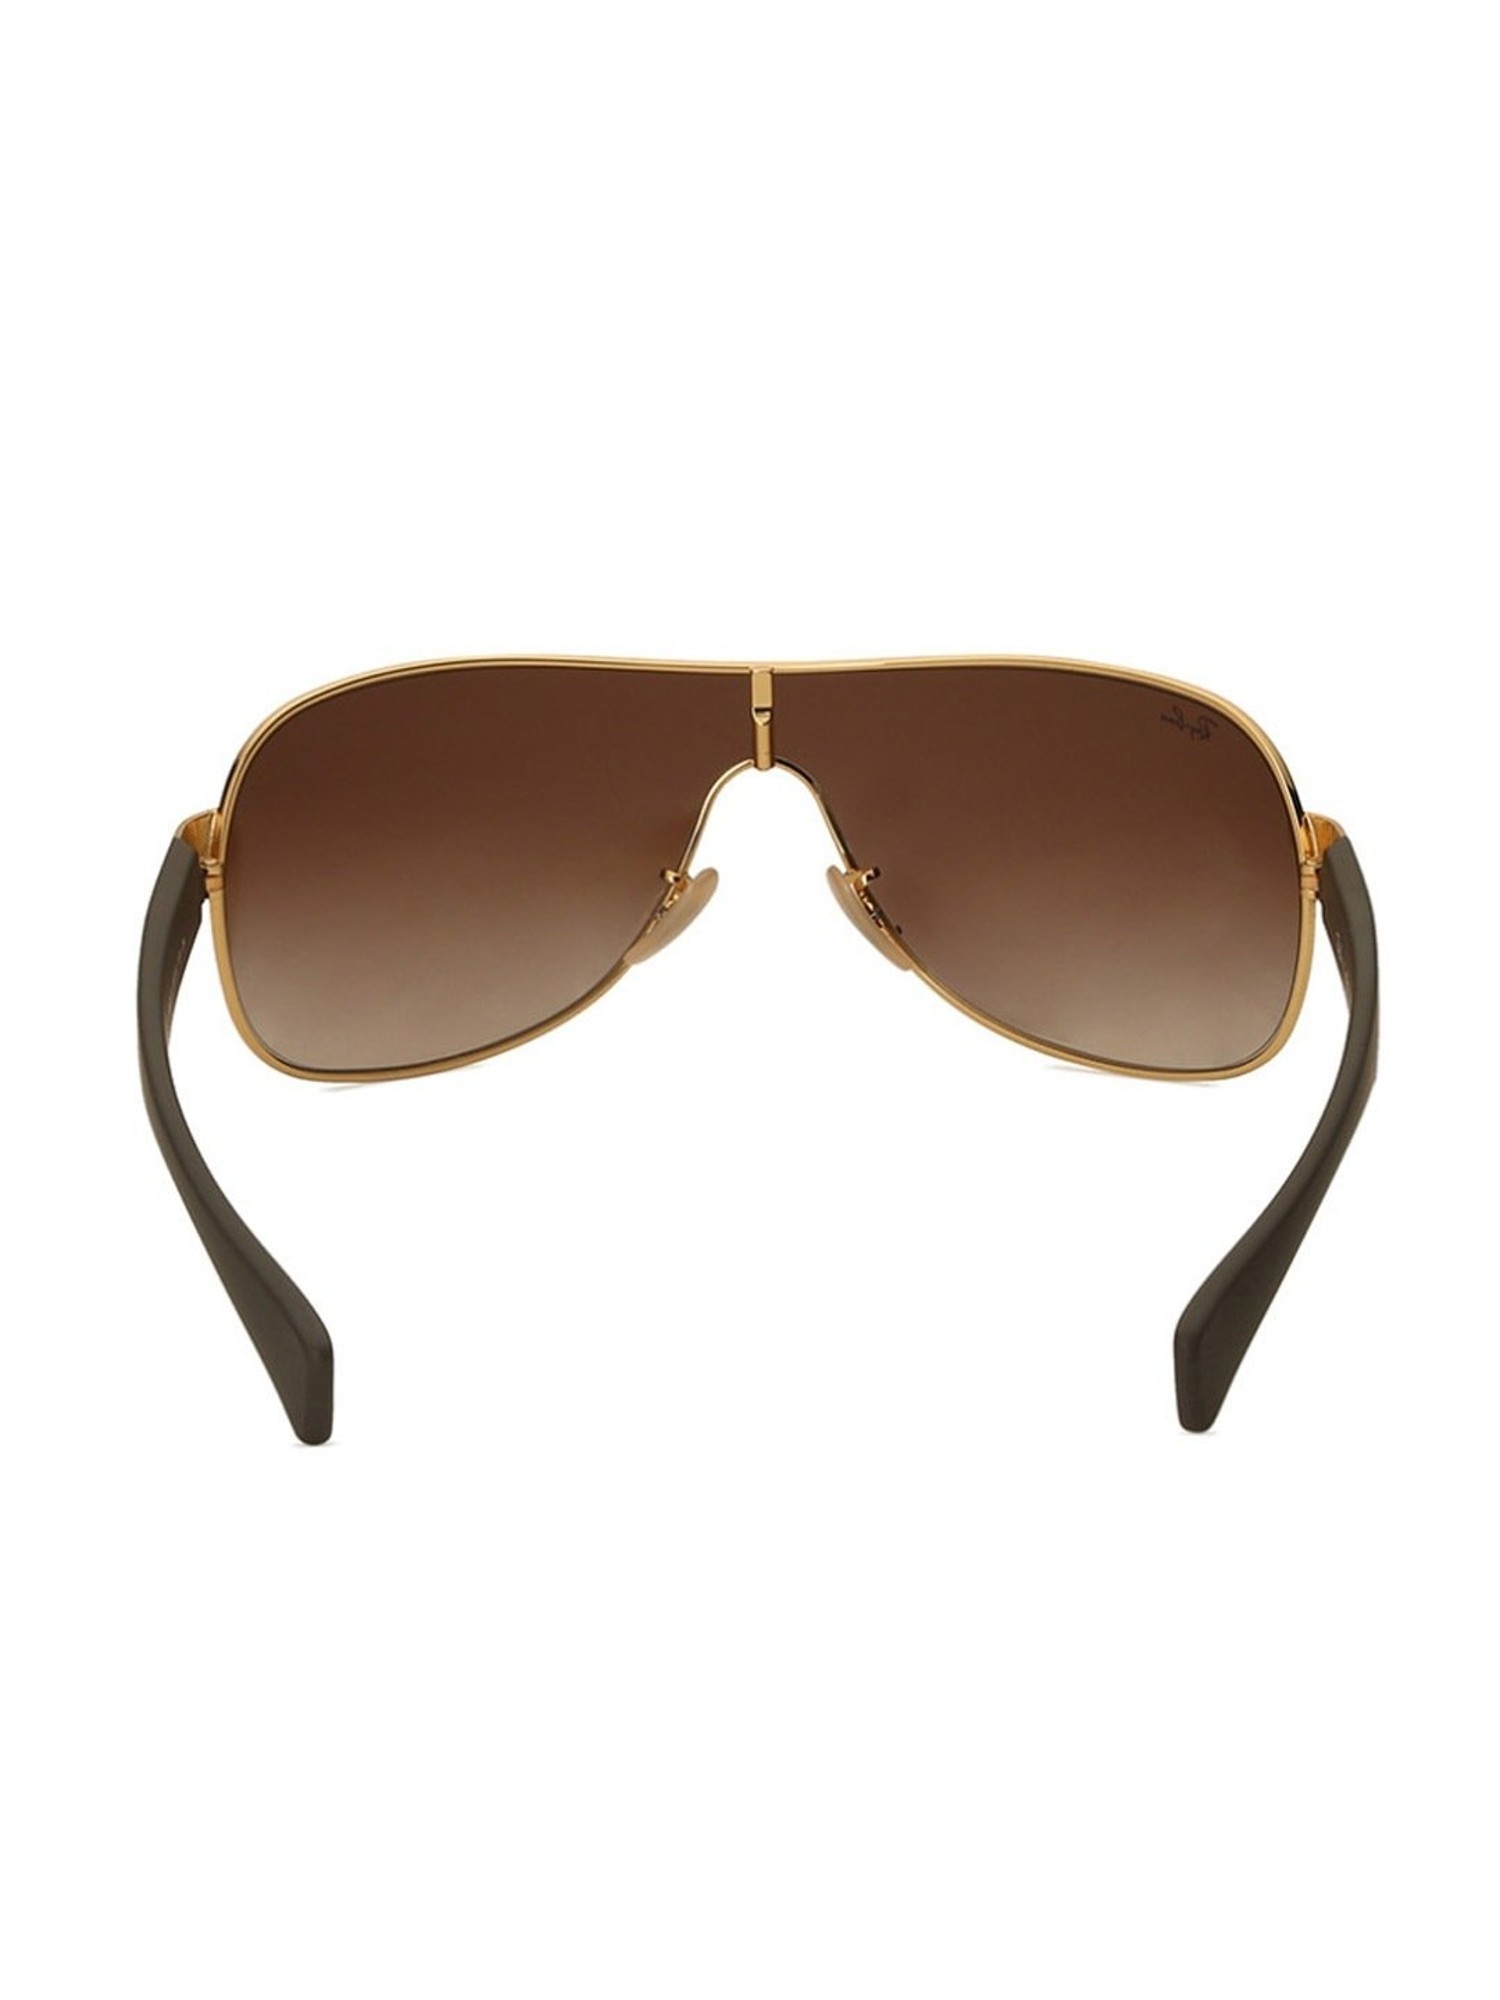 Buy Ray-Ban SRB34710011332 Brown Shield Sunglasses For Men At Best Price @  Tata CLiQ